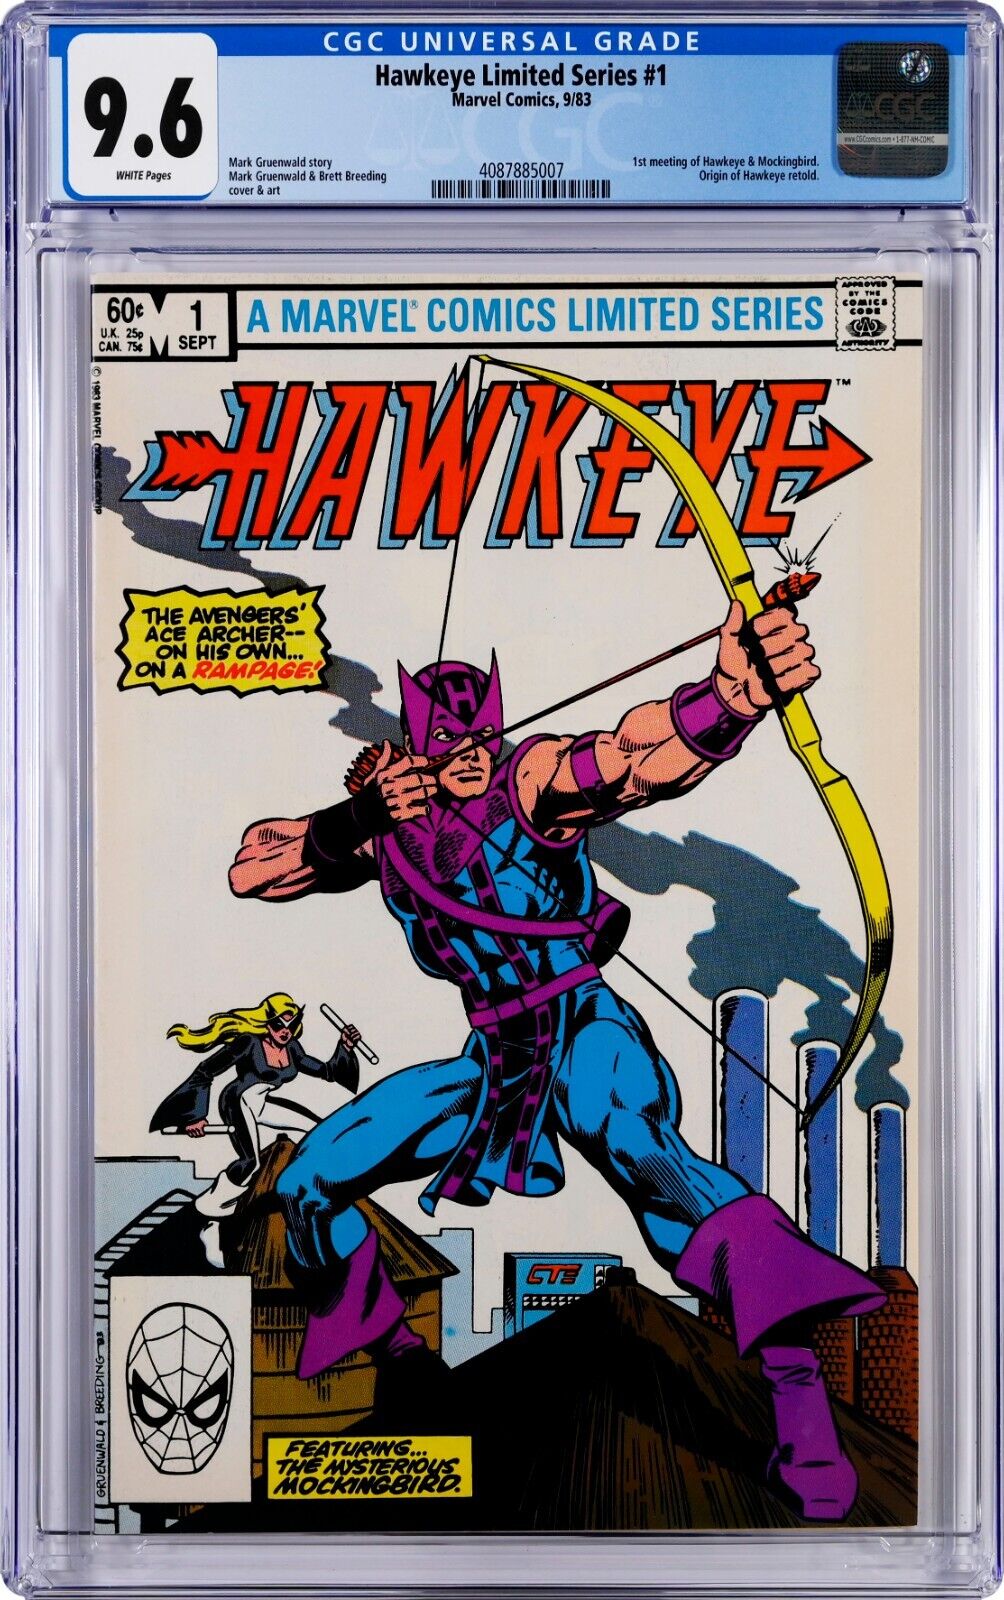 Hawkeye Limited Series #1 CGC 9.6 (Sep 1983, Marvel) Mark Gruenwald, Mockingbird